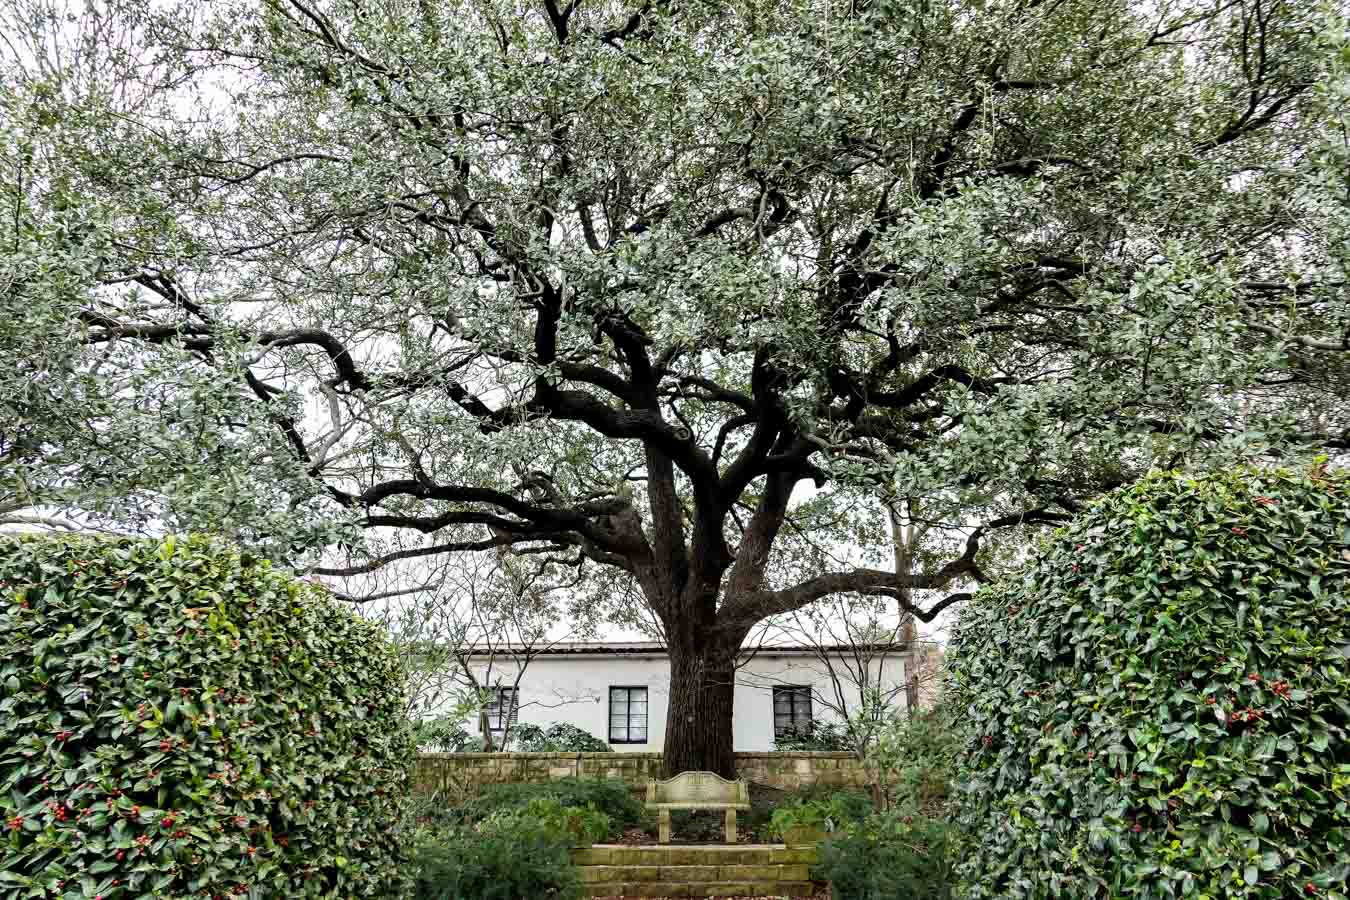 Dallas Arboretum + Botanical Gardens Photos + Review - Women's Garden Bench + Stairs